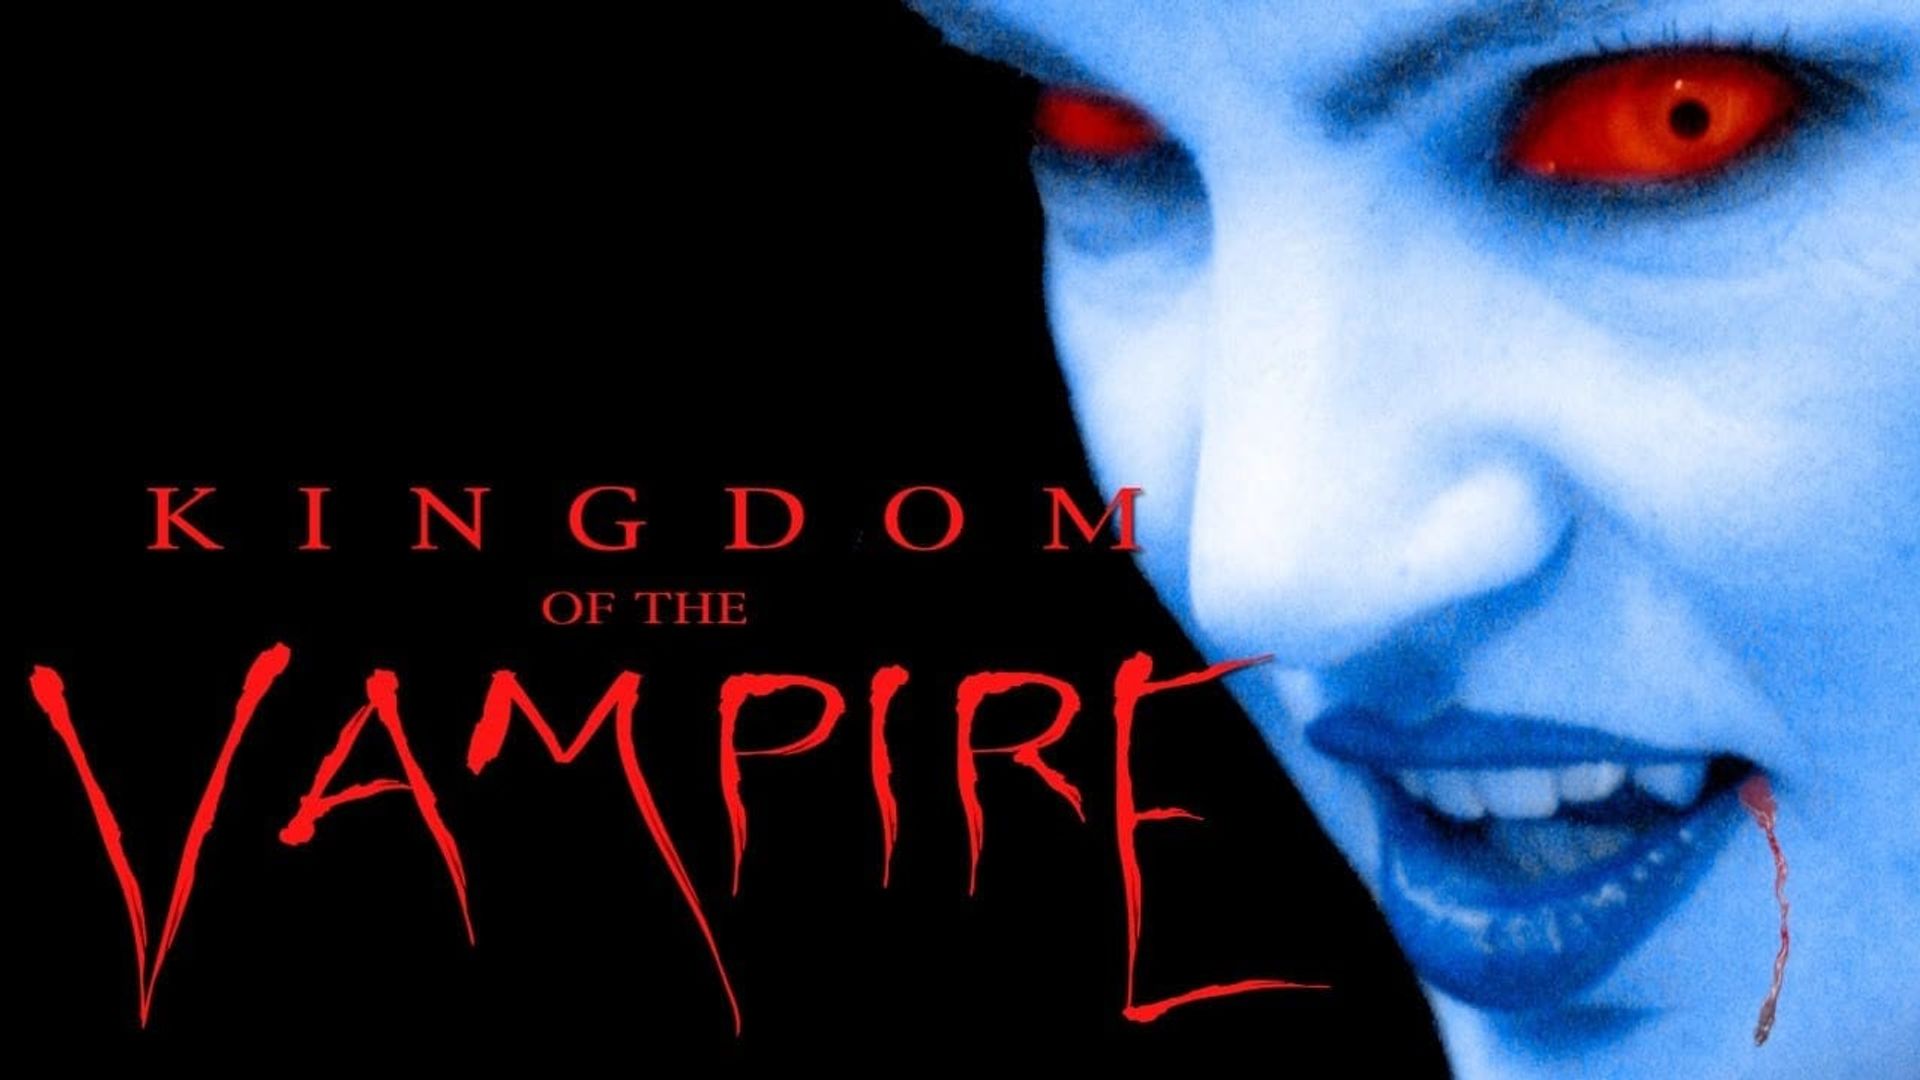 Kingdom of the Vampire background